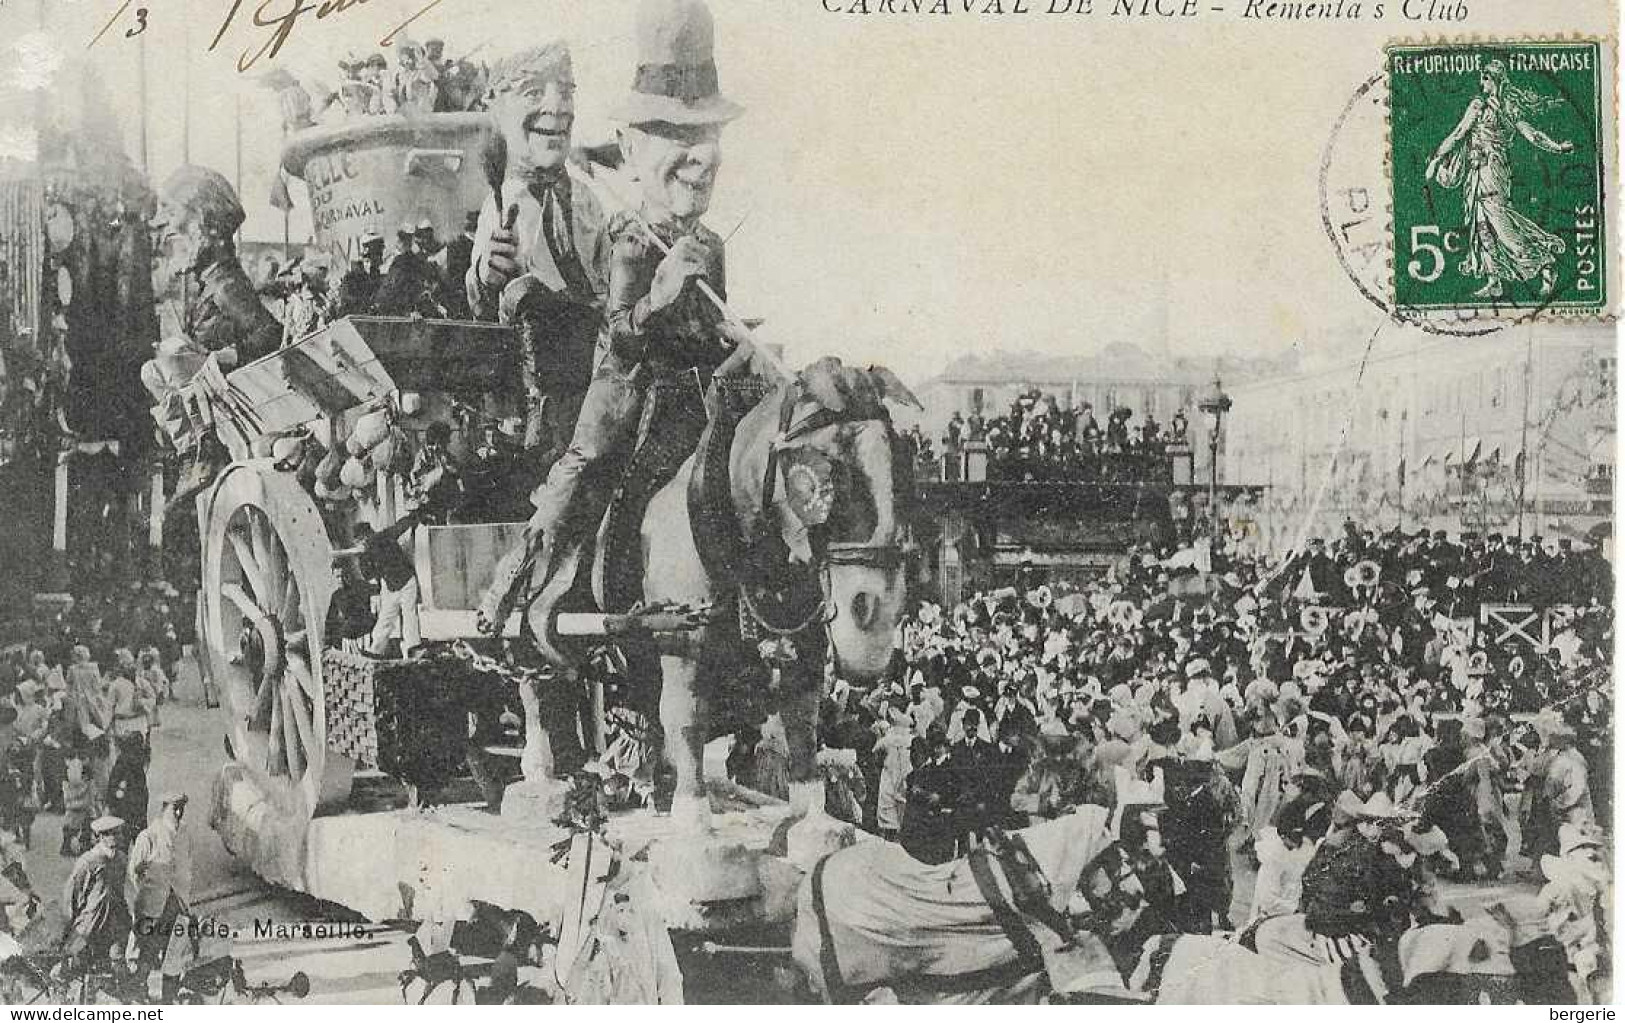 C/274              06    Nice    -    Carnaval  De 1909   -   Rementa'club - Karneval